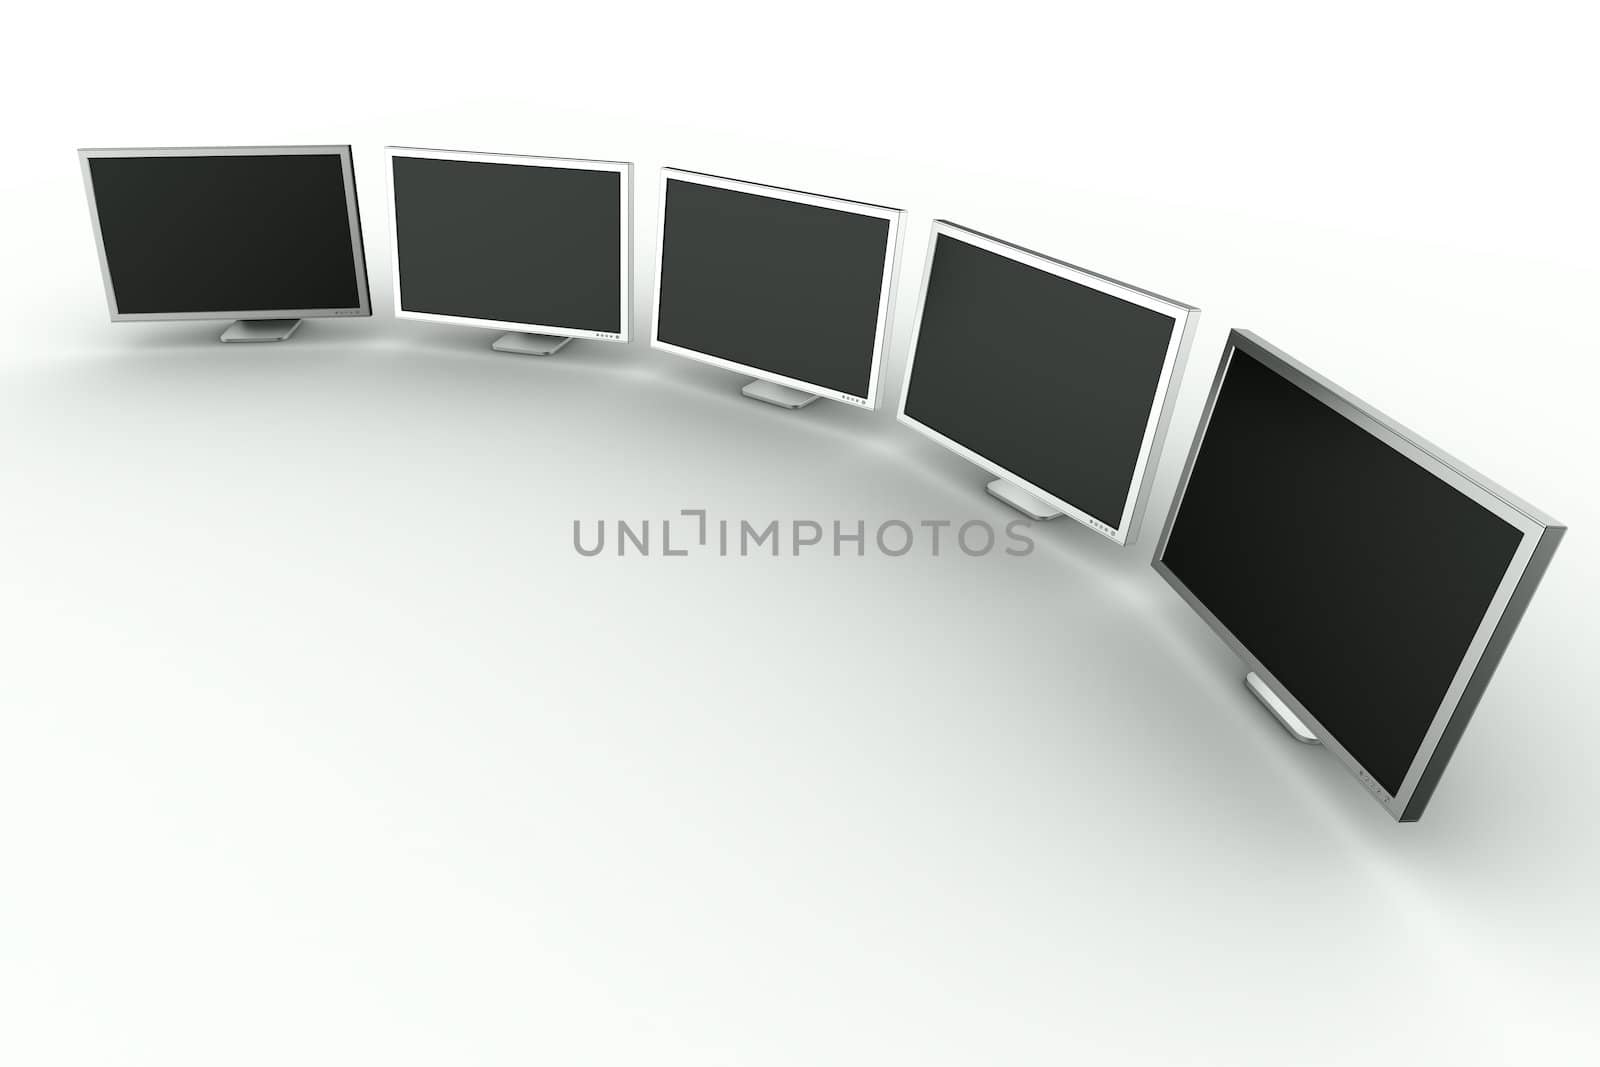 Multiple monitors by zentilia